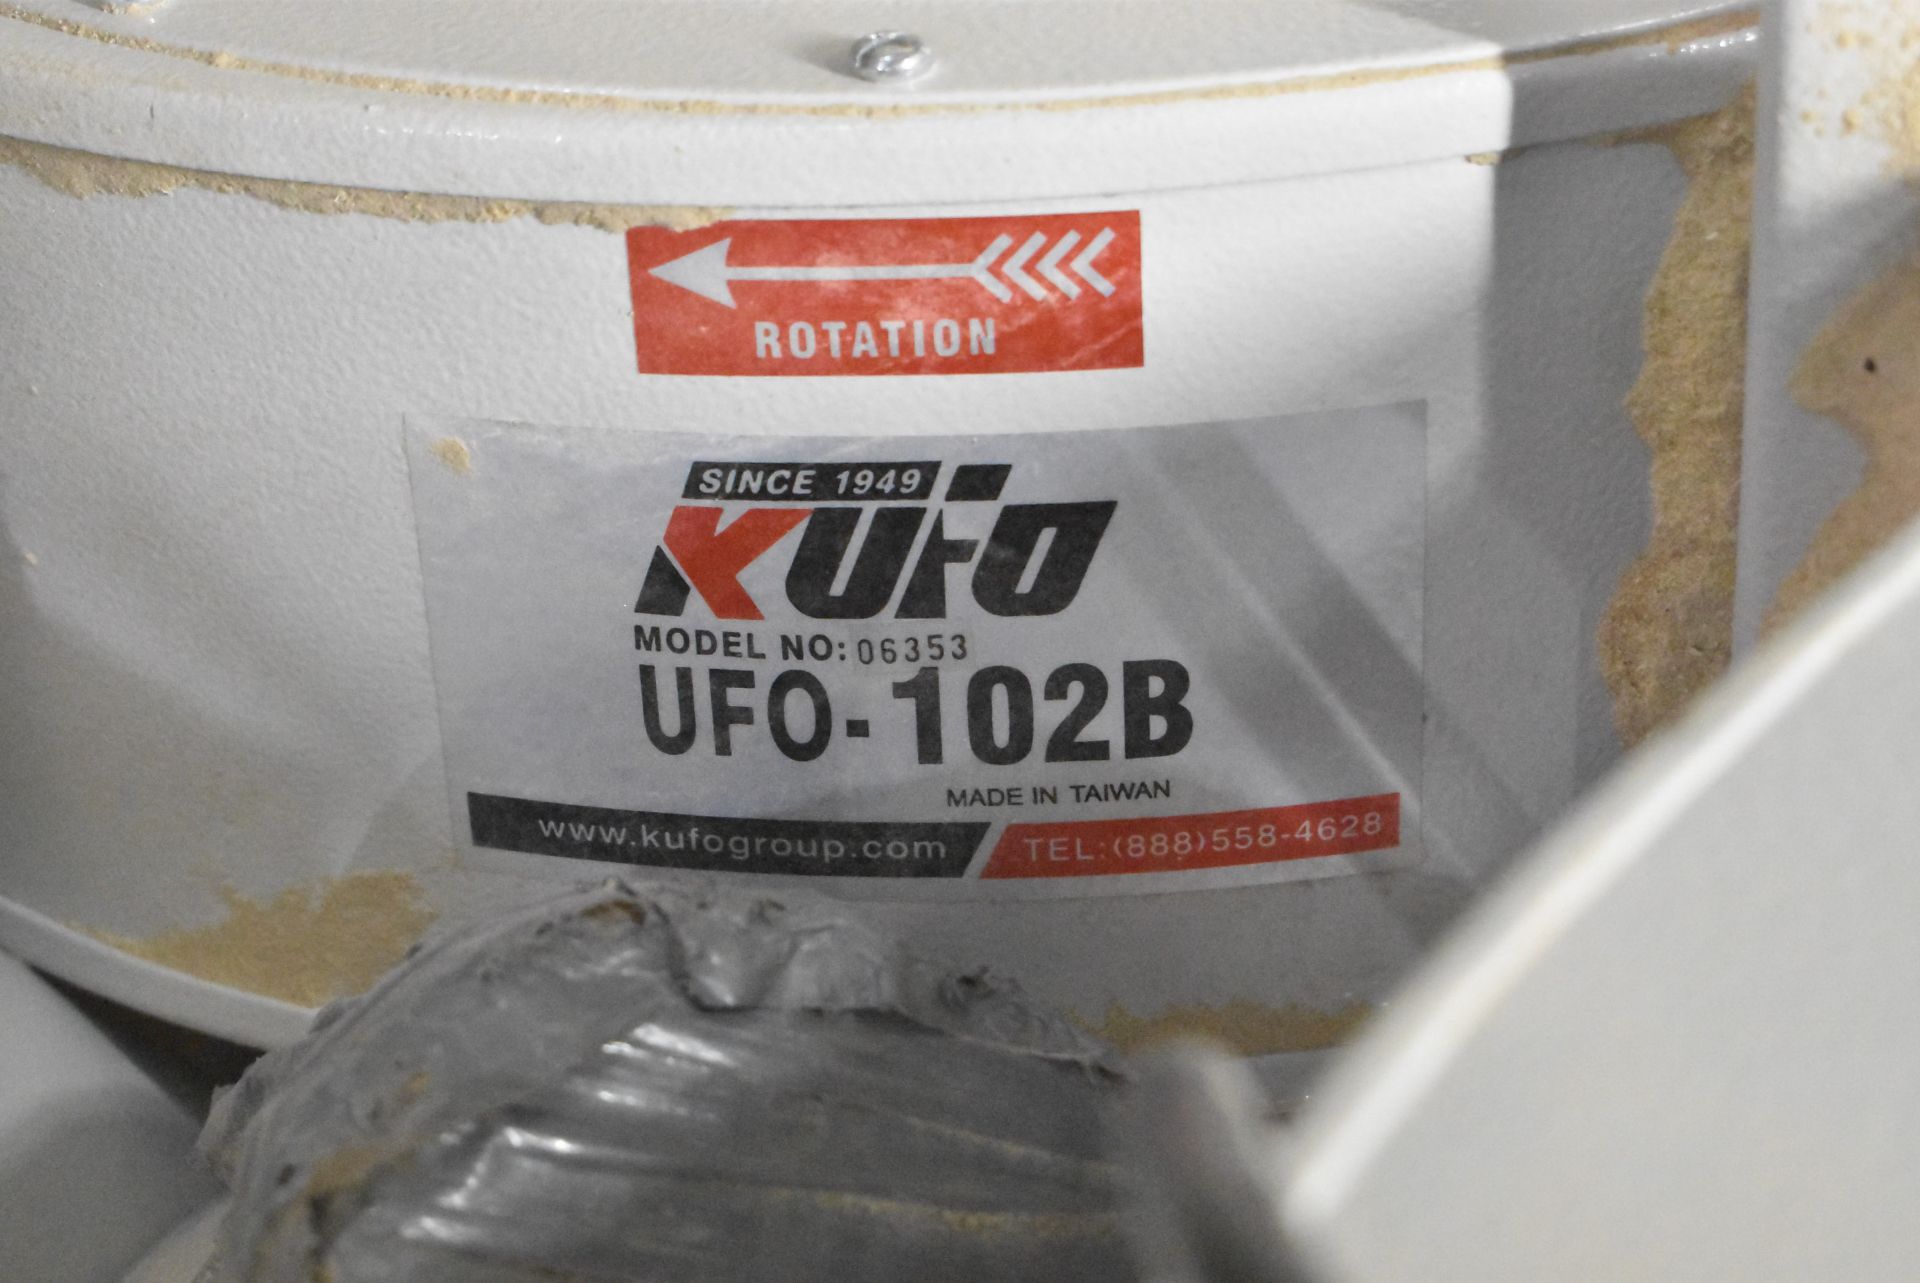 KUFO UFO-102B 3 HP PORTABLE BAG DUST COLLECTOR, S/N: 06353 - Image 2 of 4